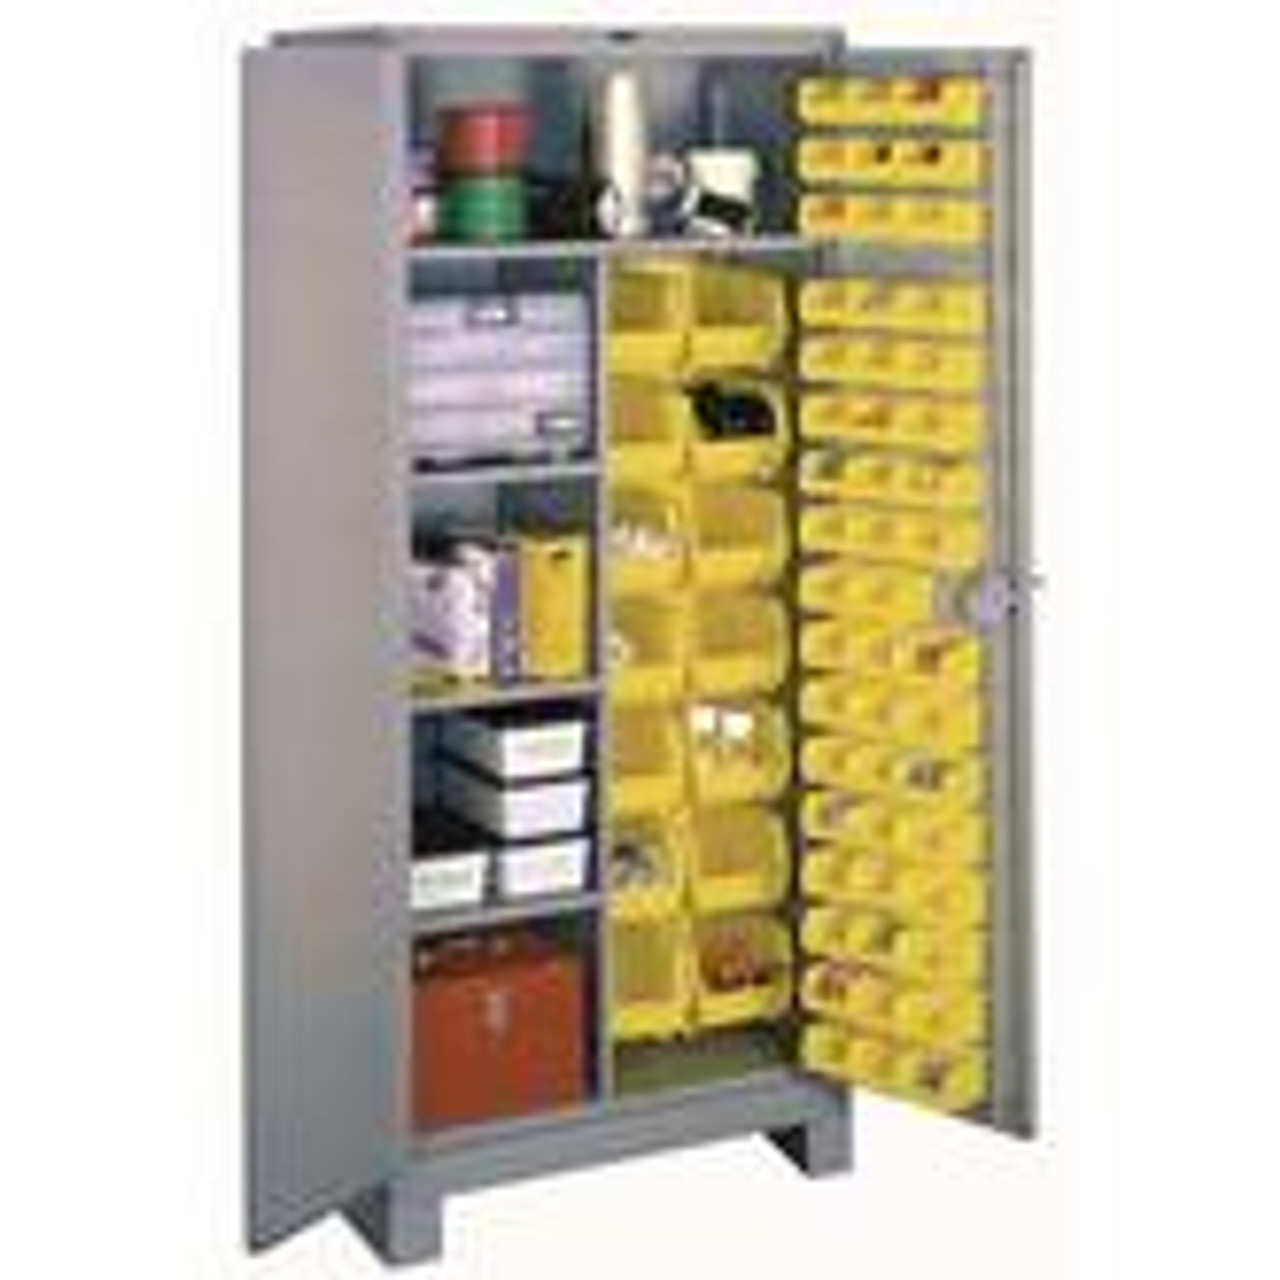 Lyon 48W x 21D x 82H All-Welded Steel Industrial Bin Storage Cabinet - 181 Plastic Yellow Bins - Made in The USA